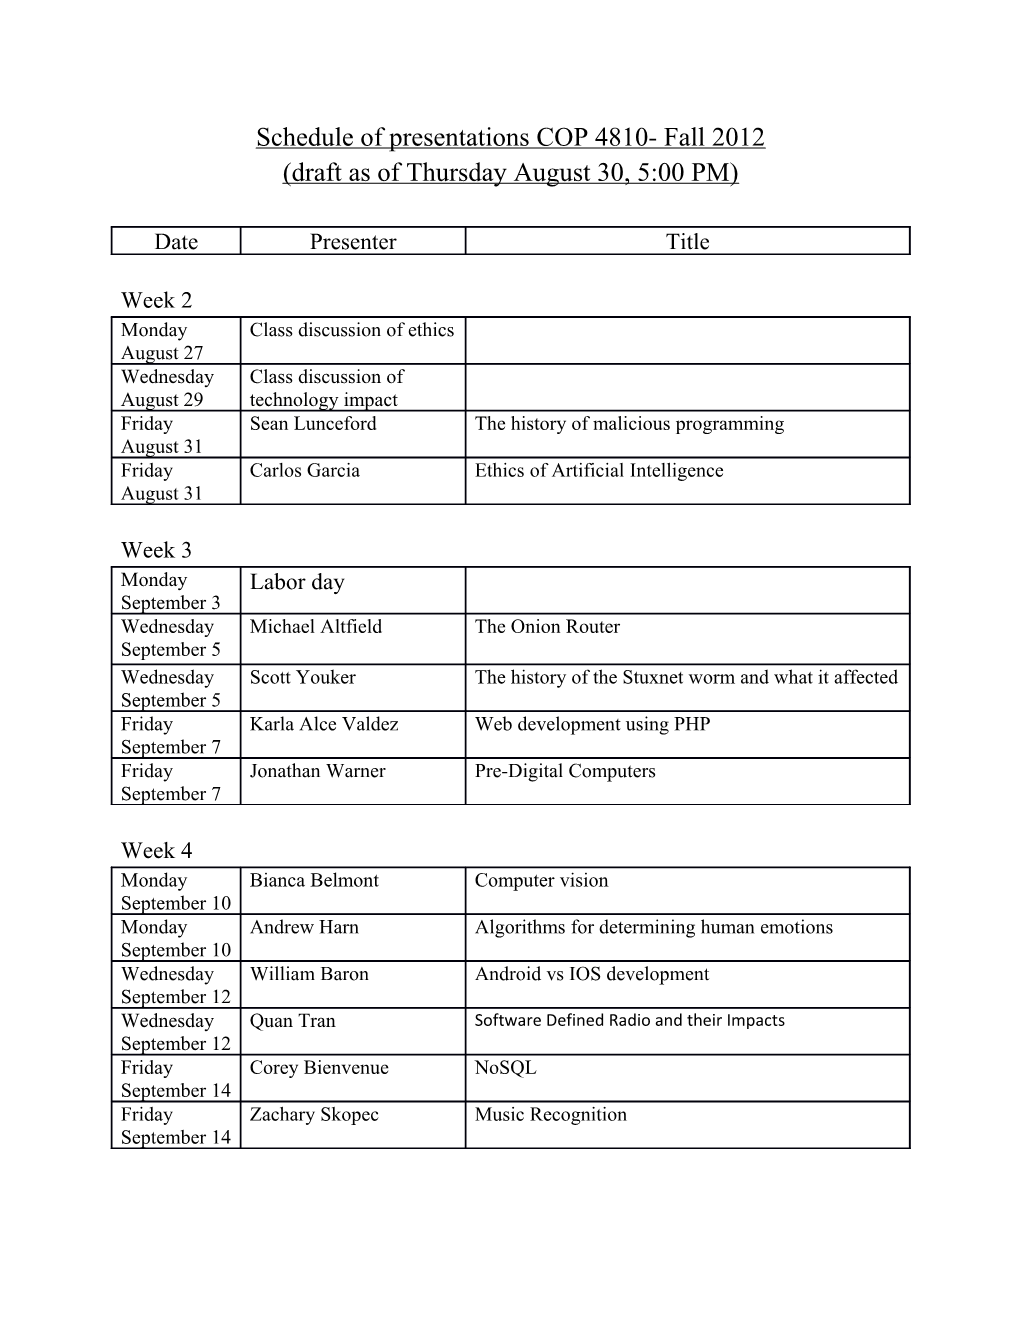 Schedule of Presentations COP 4810-Fall 2012